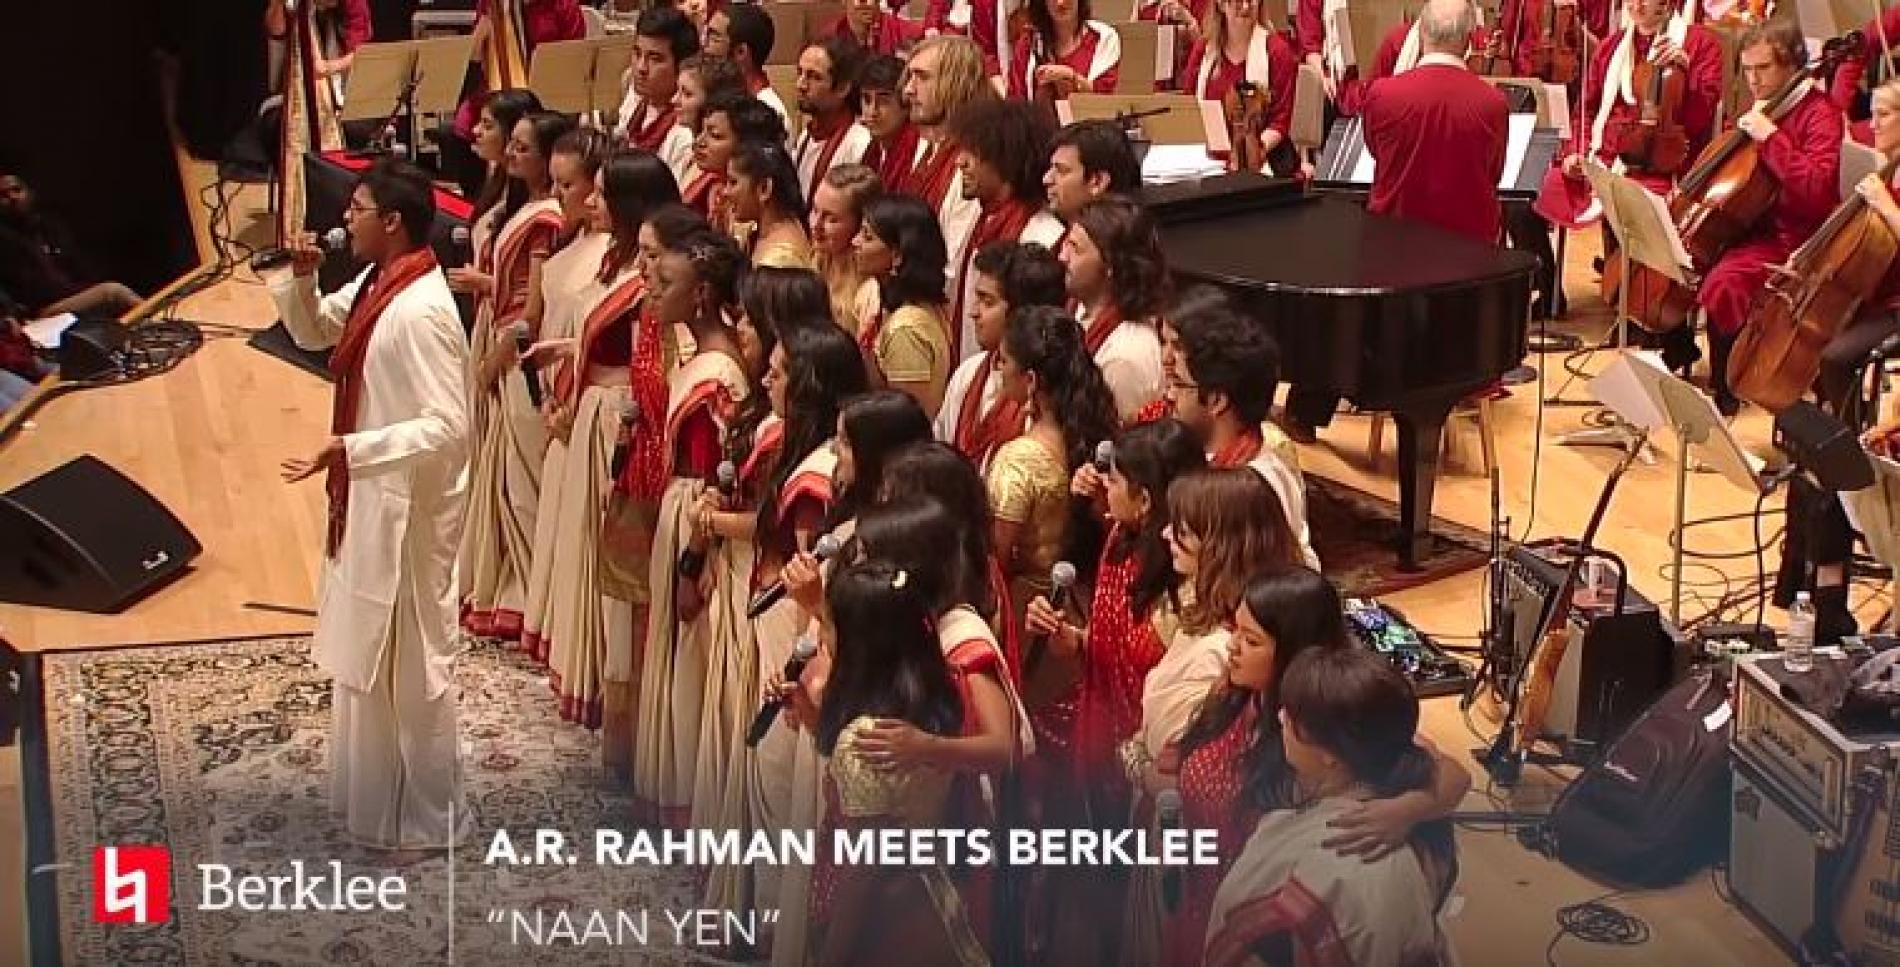 A. R. Rahman Meets Berklee – Naan Yen (11 of 16)